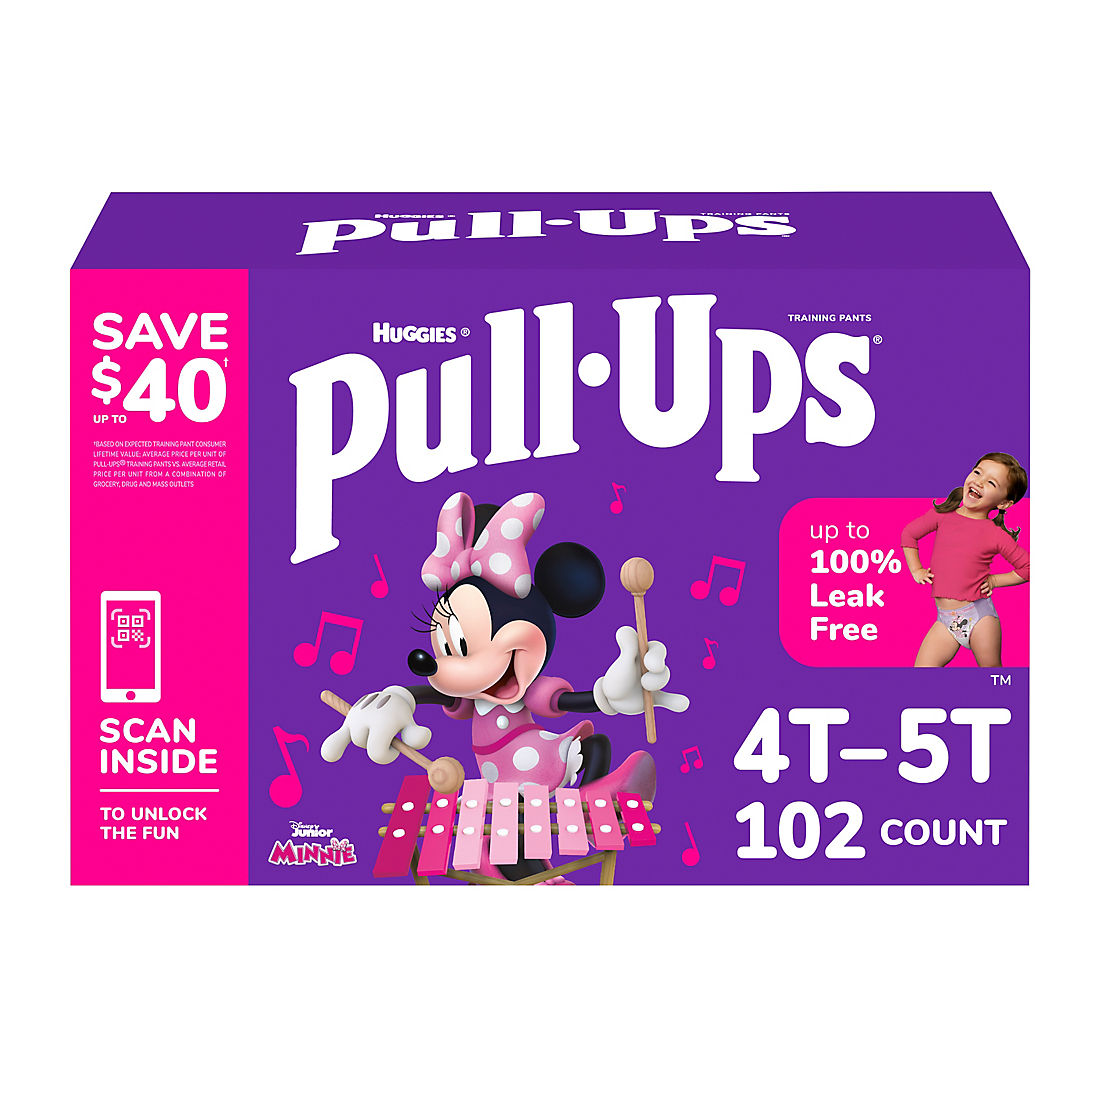 Huggies Pull-Ups Girl's Training Pants - BJs Wholesale Club